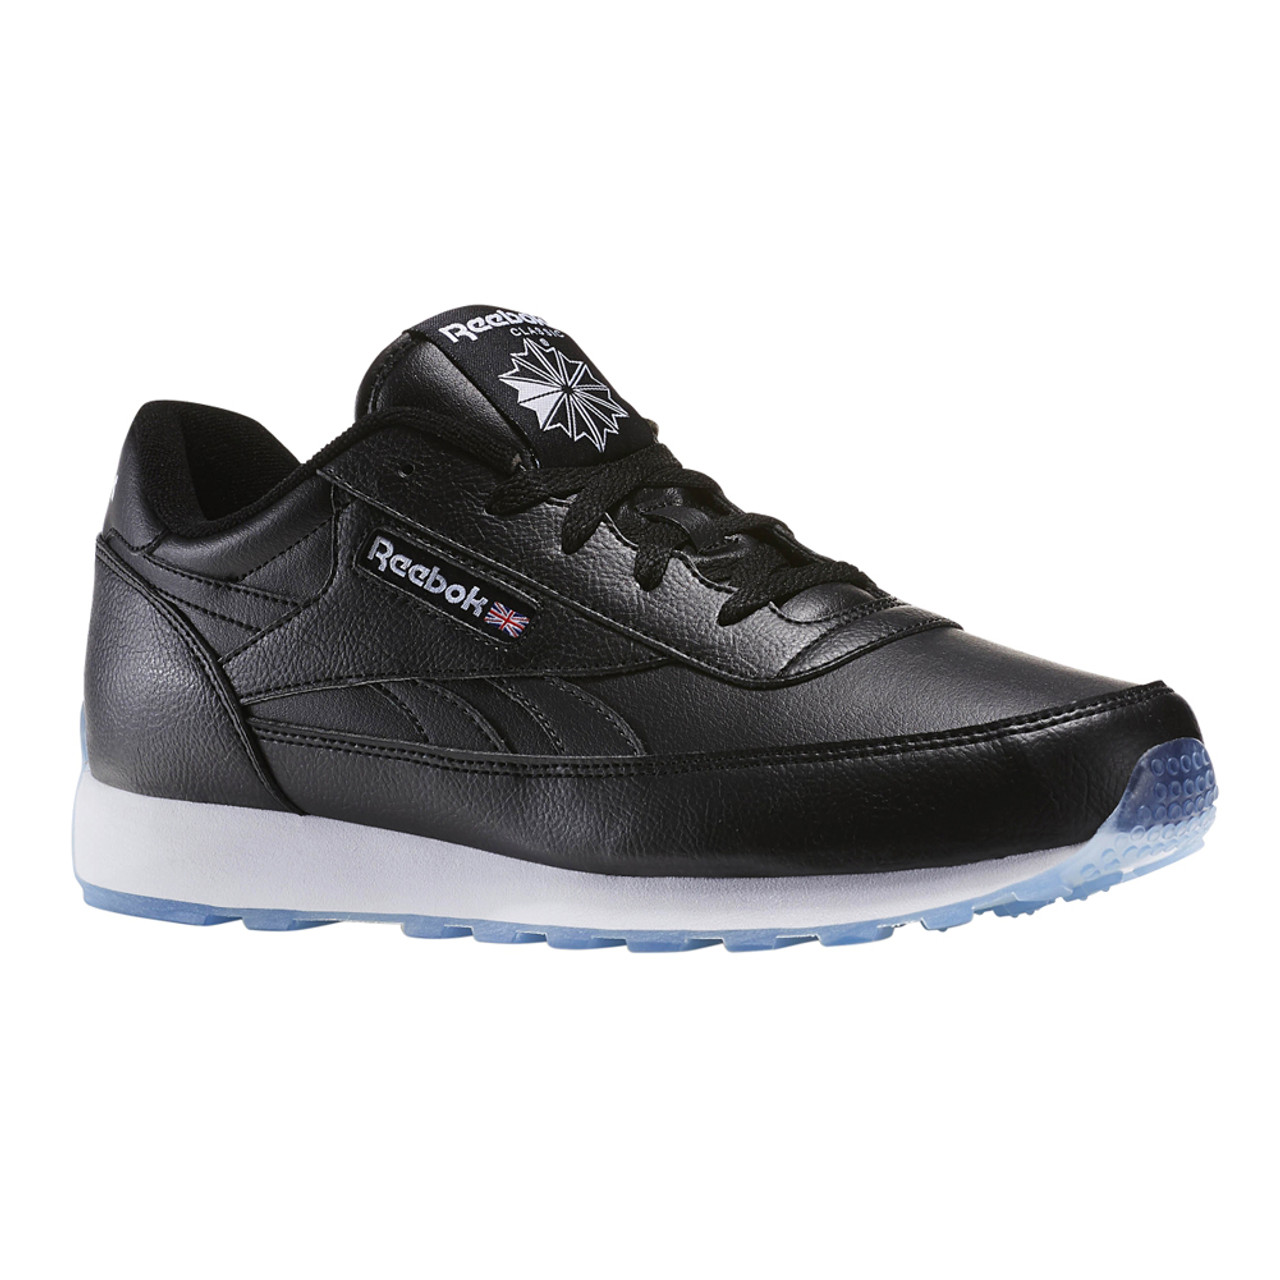 Reebok Men's Classic Renaissance Ice Fashion Sneaker - Black | Discount ...